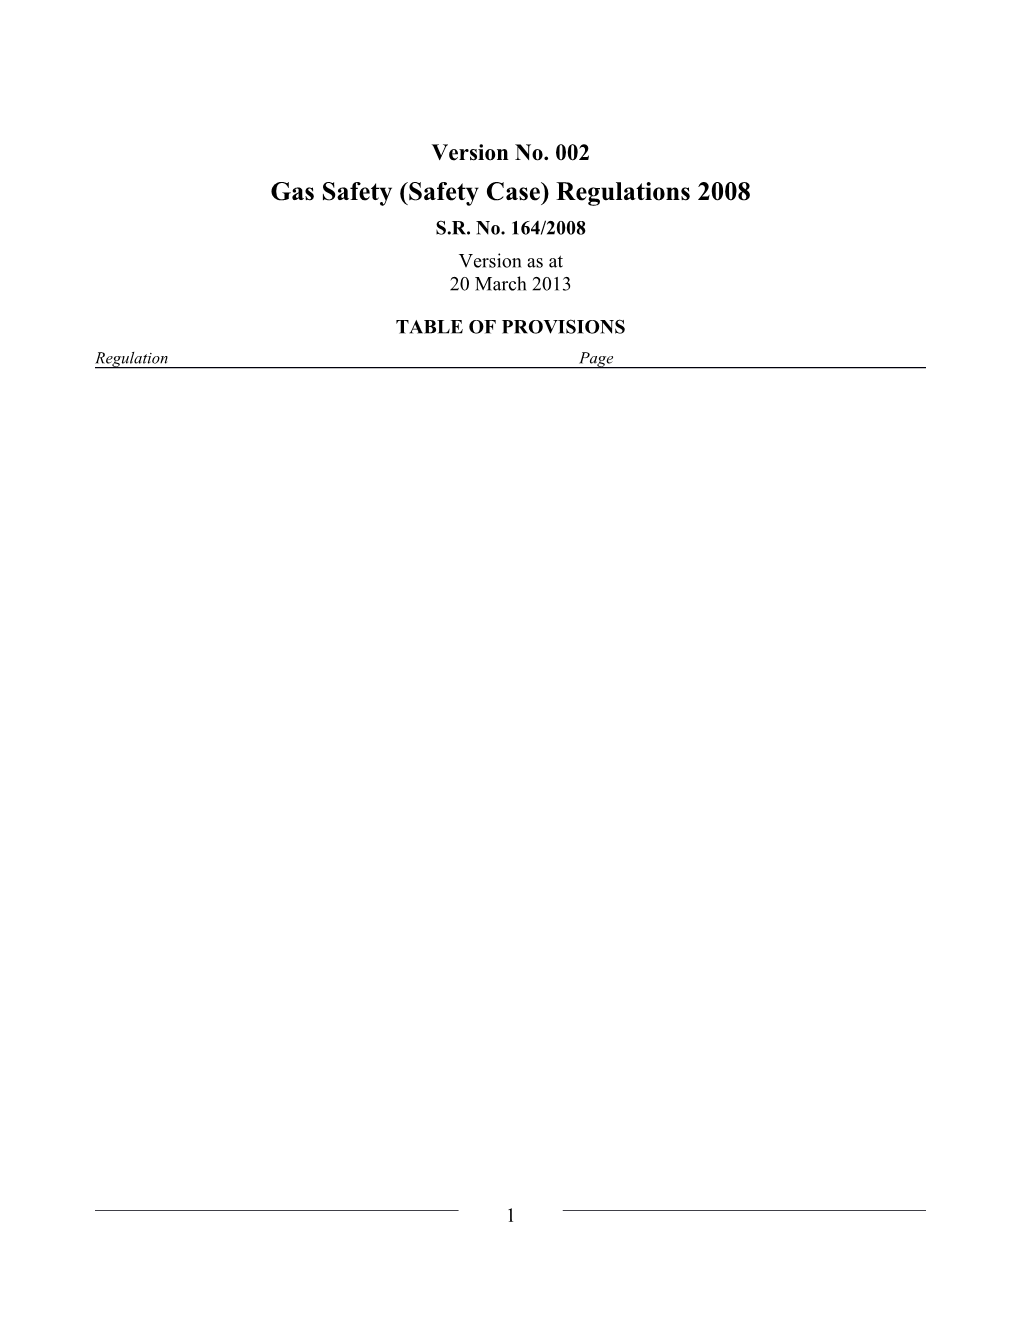 Gas Safety (Safety Case) Regulations 2008